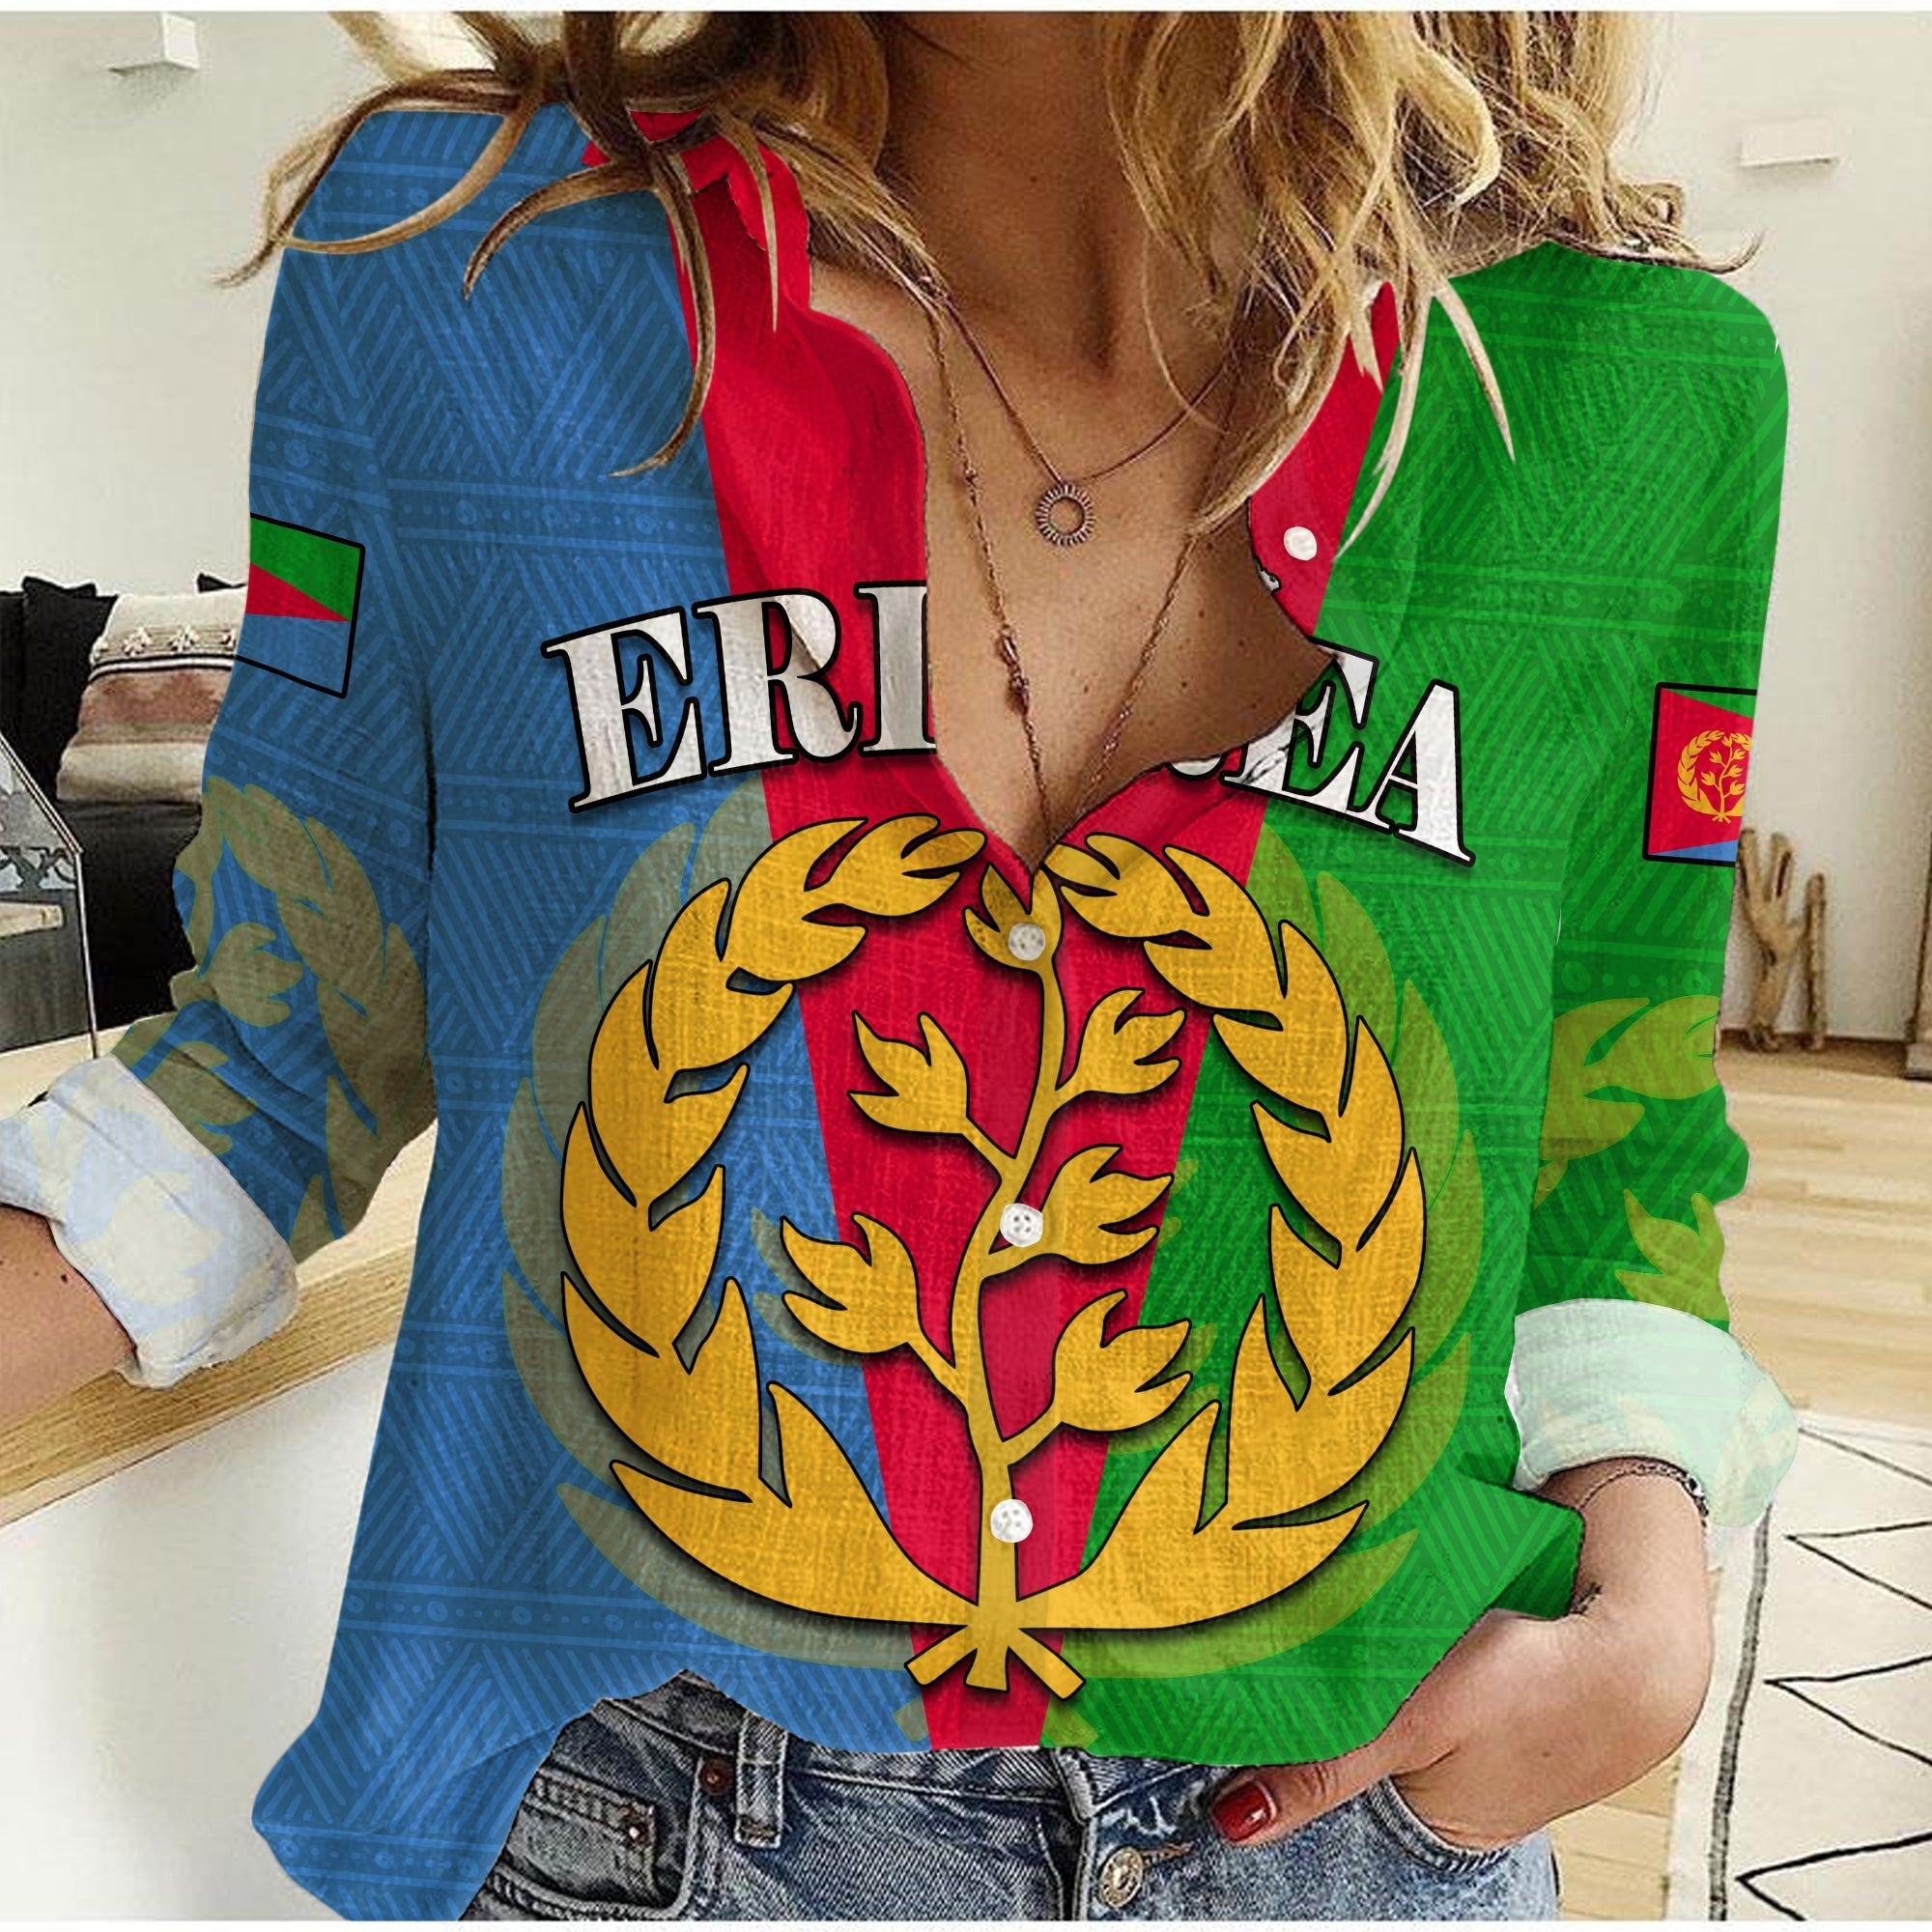 eritrea-women-casual-shirt-eritrean-map-mix-african-pattern-simple-style